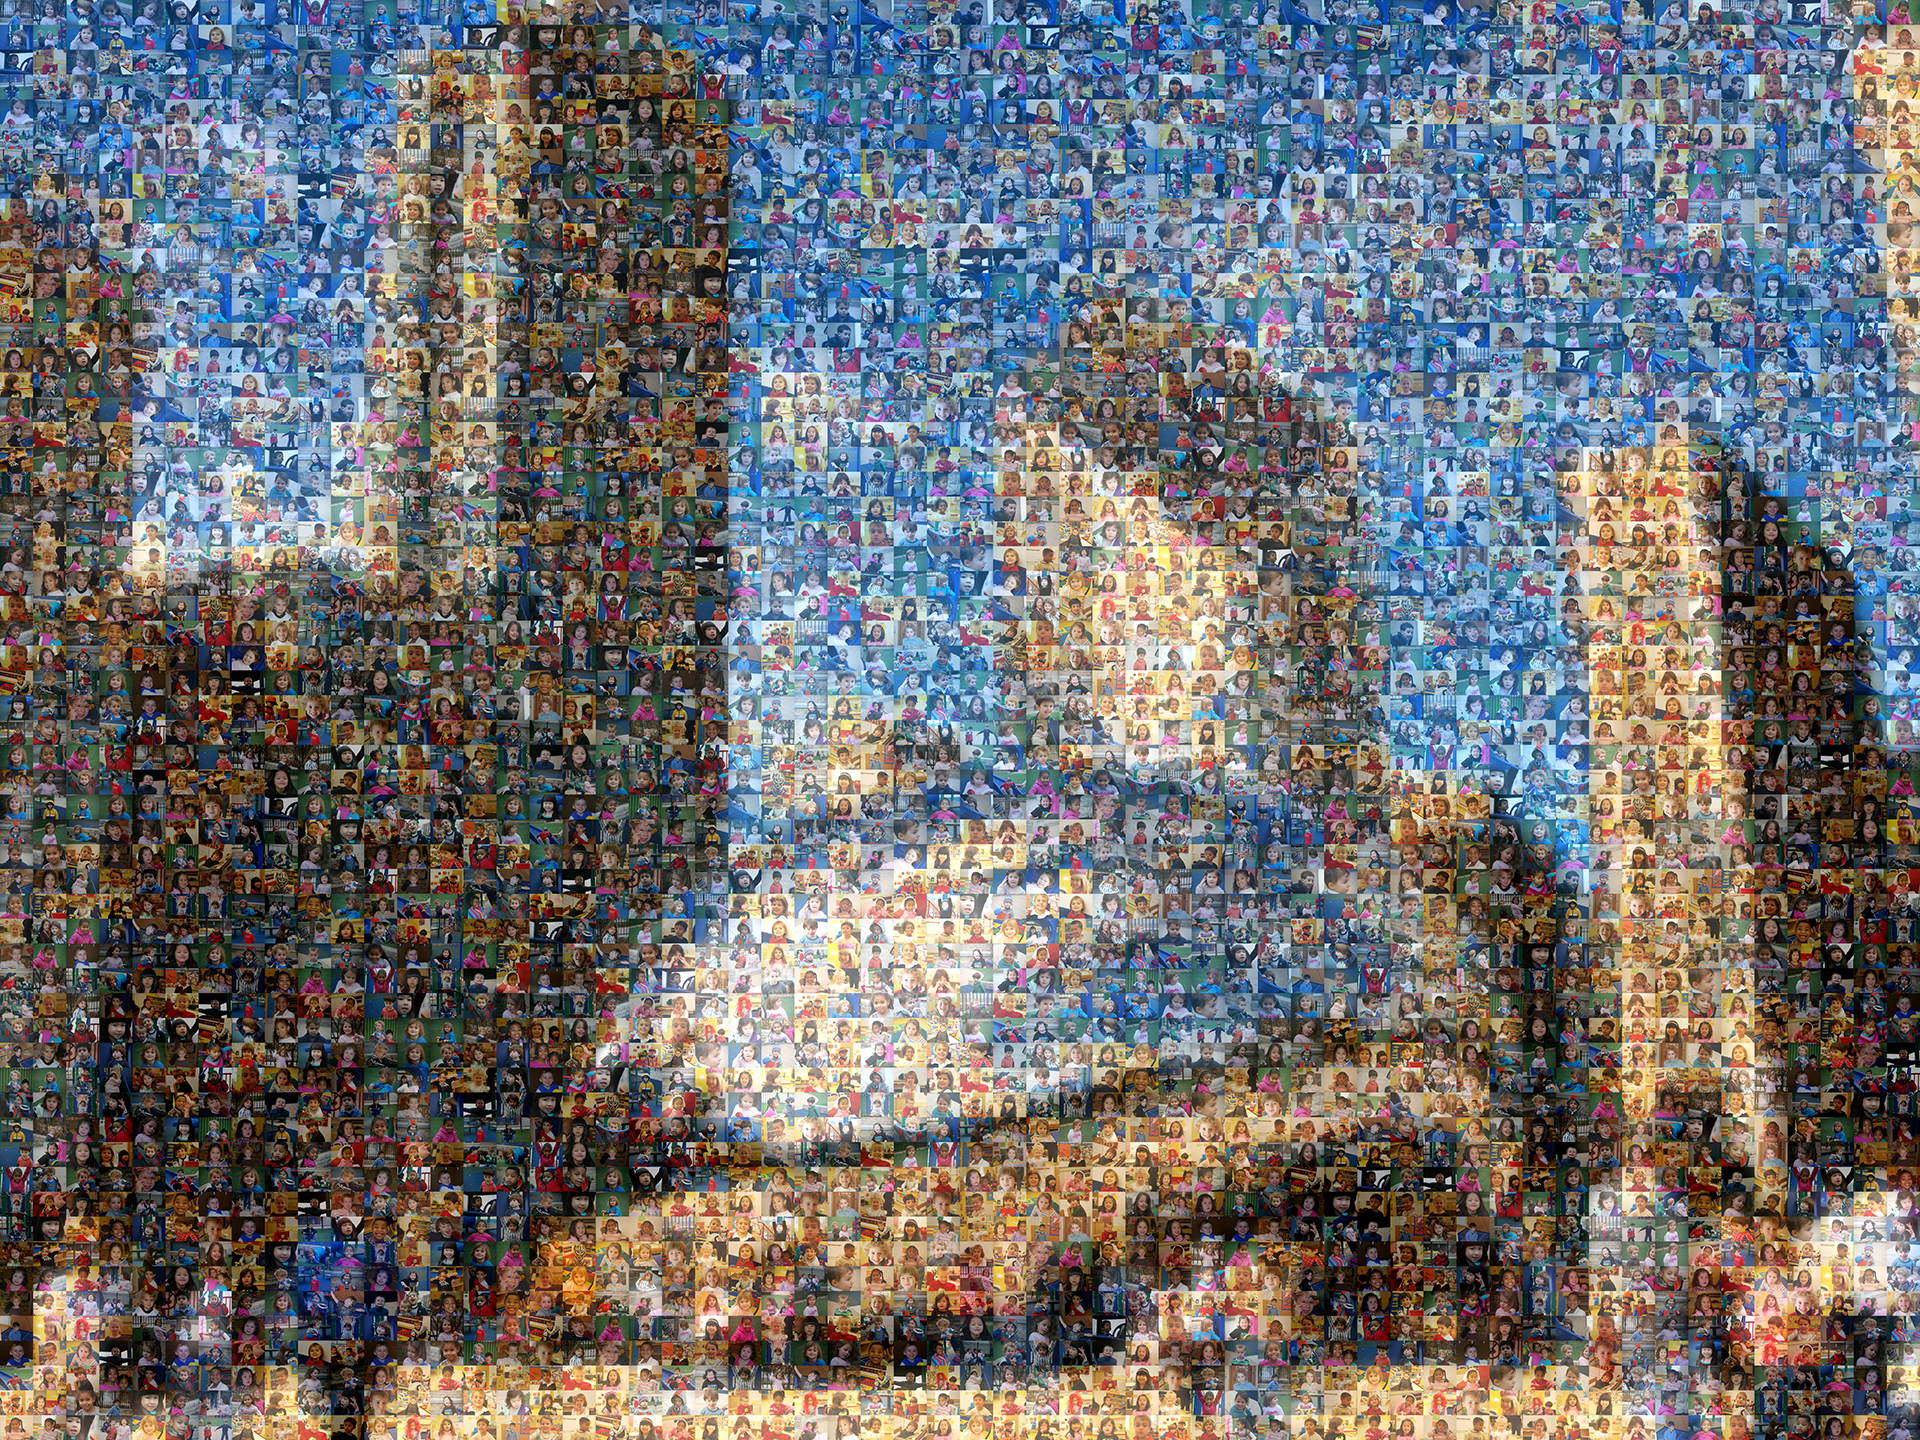 photo mosaic created using 239 school photos